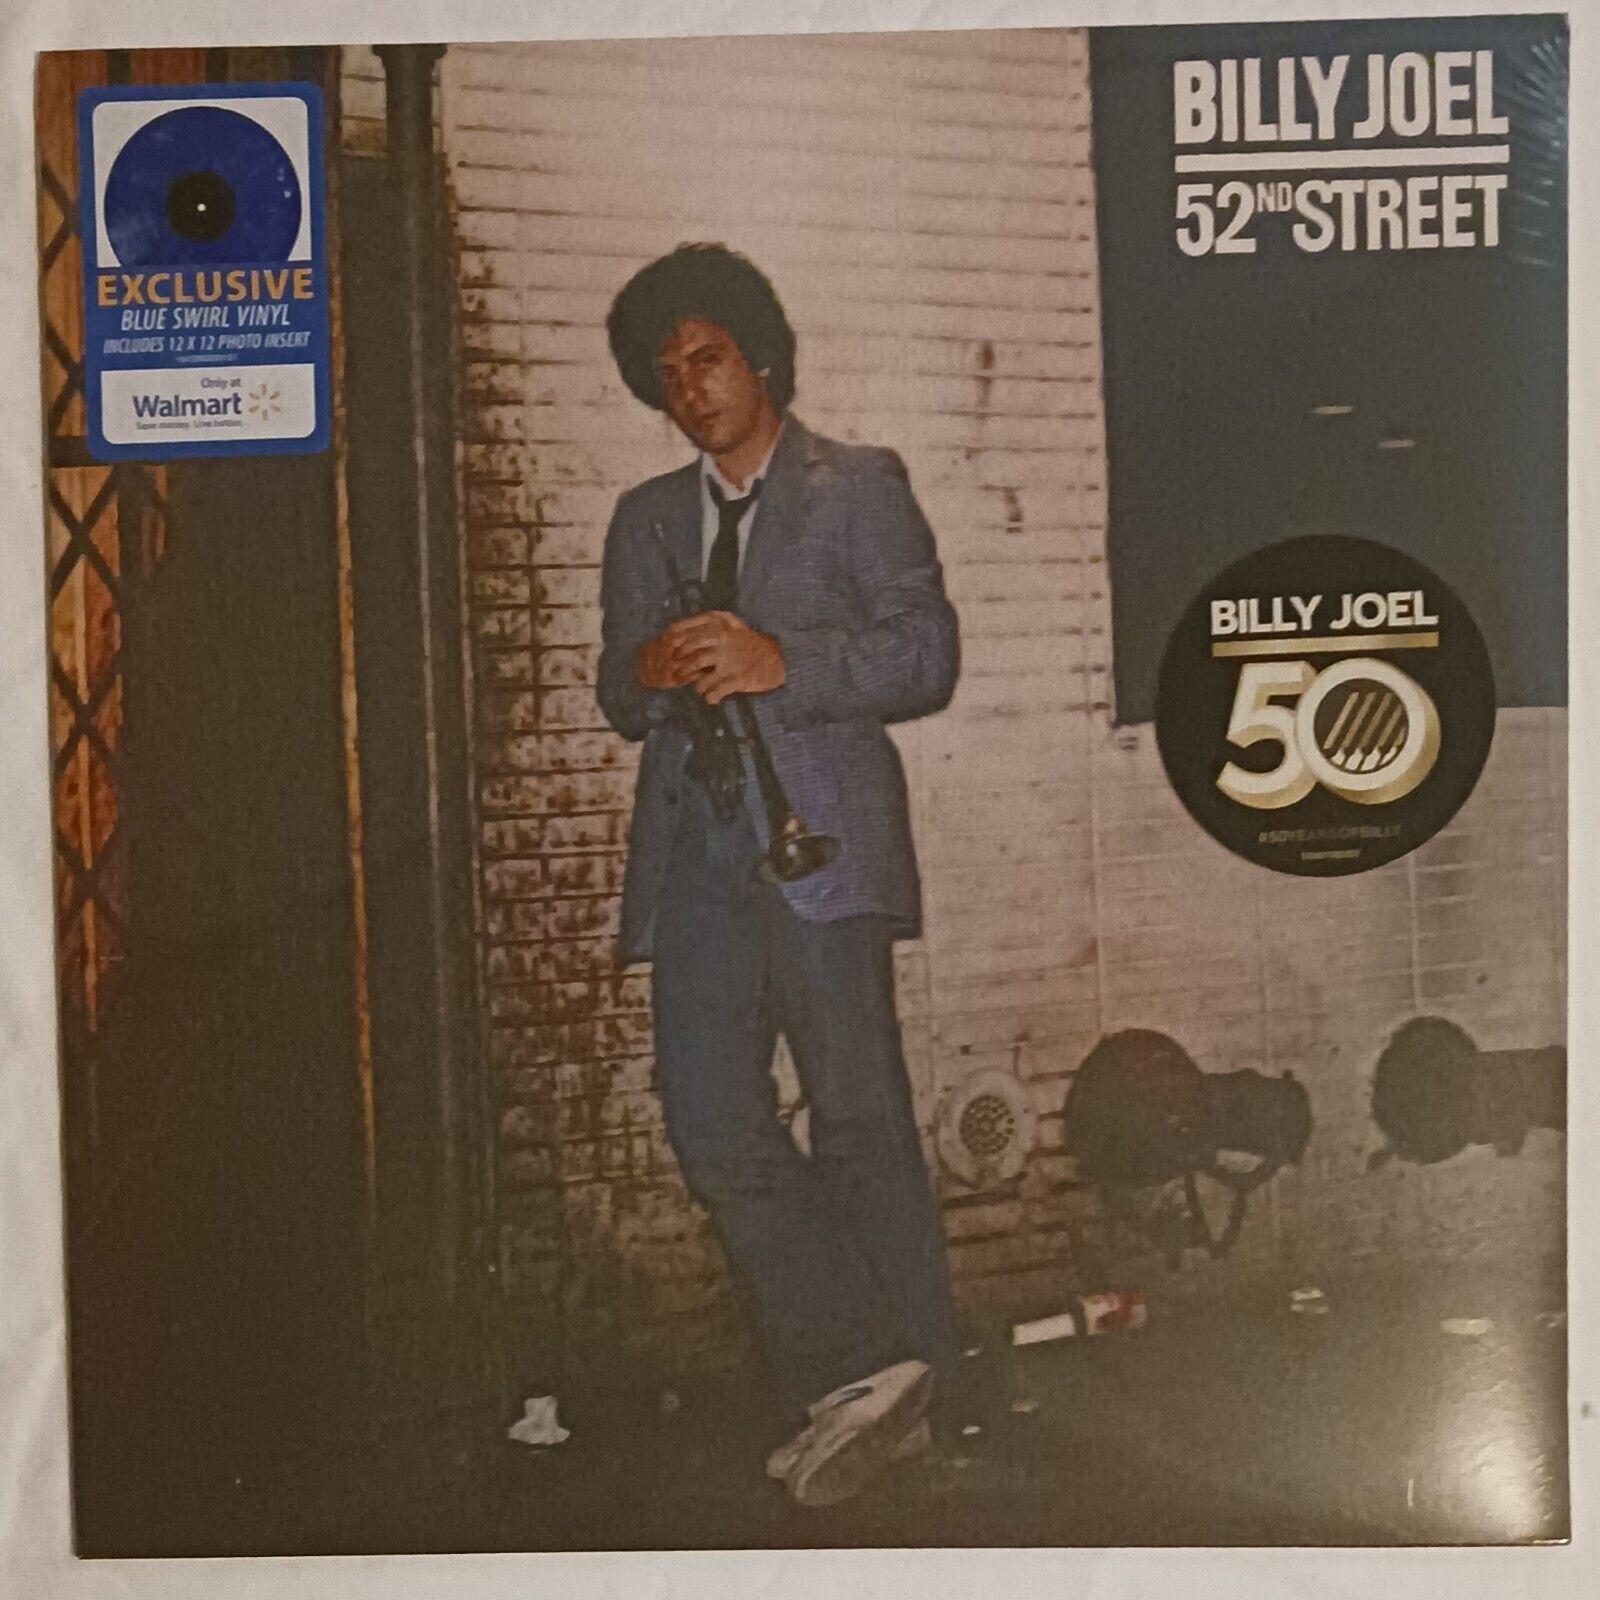 BILLY JOEL - 52nd STREET BLUE COLORED VINYL LP NEW SEALED WALMART EXCLUSIVE